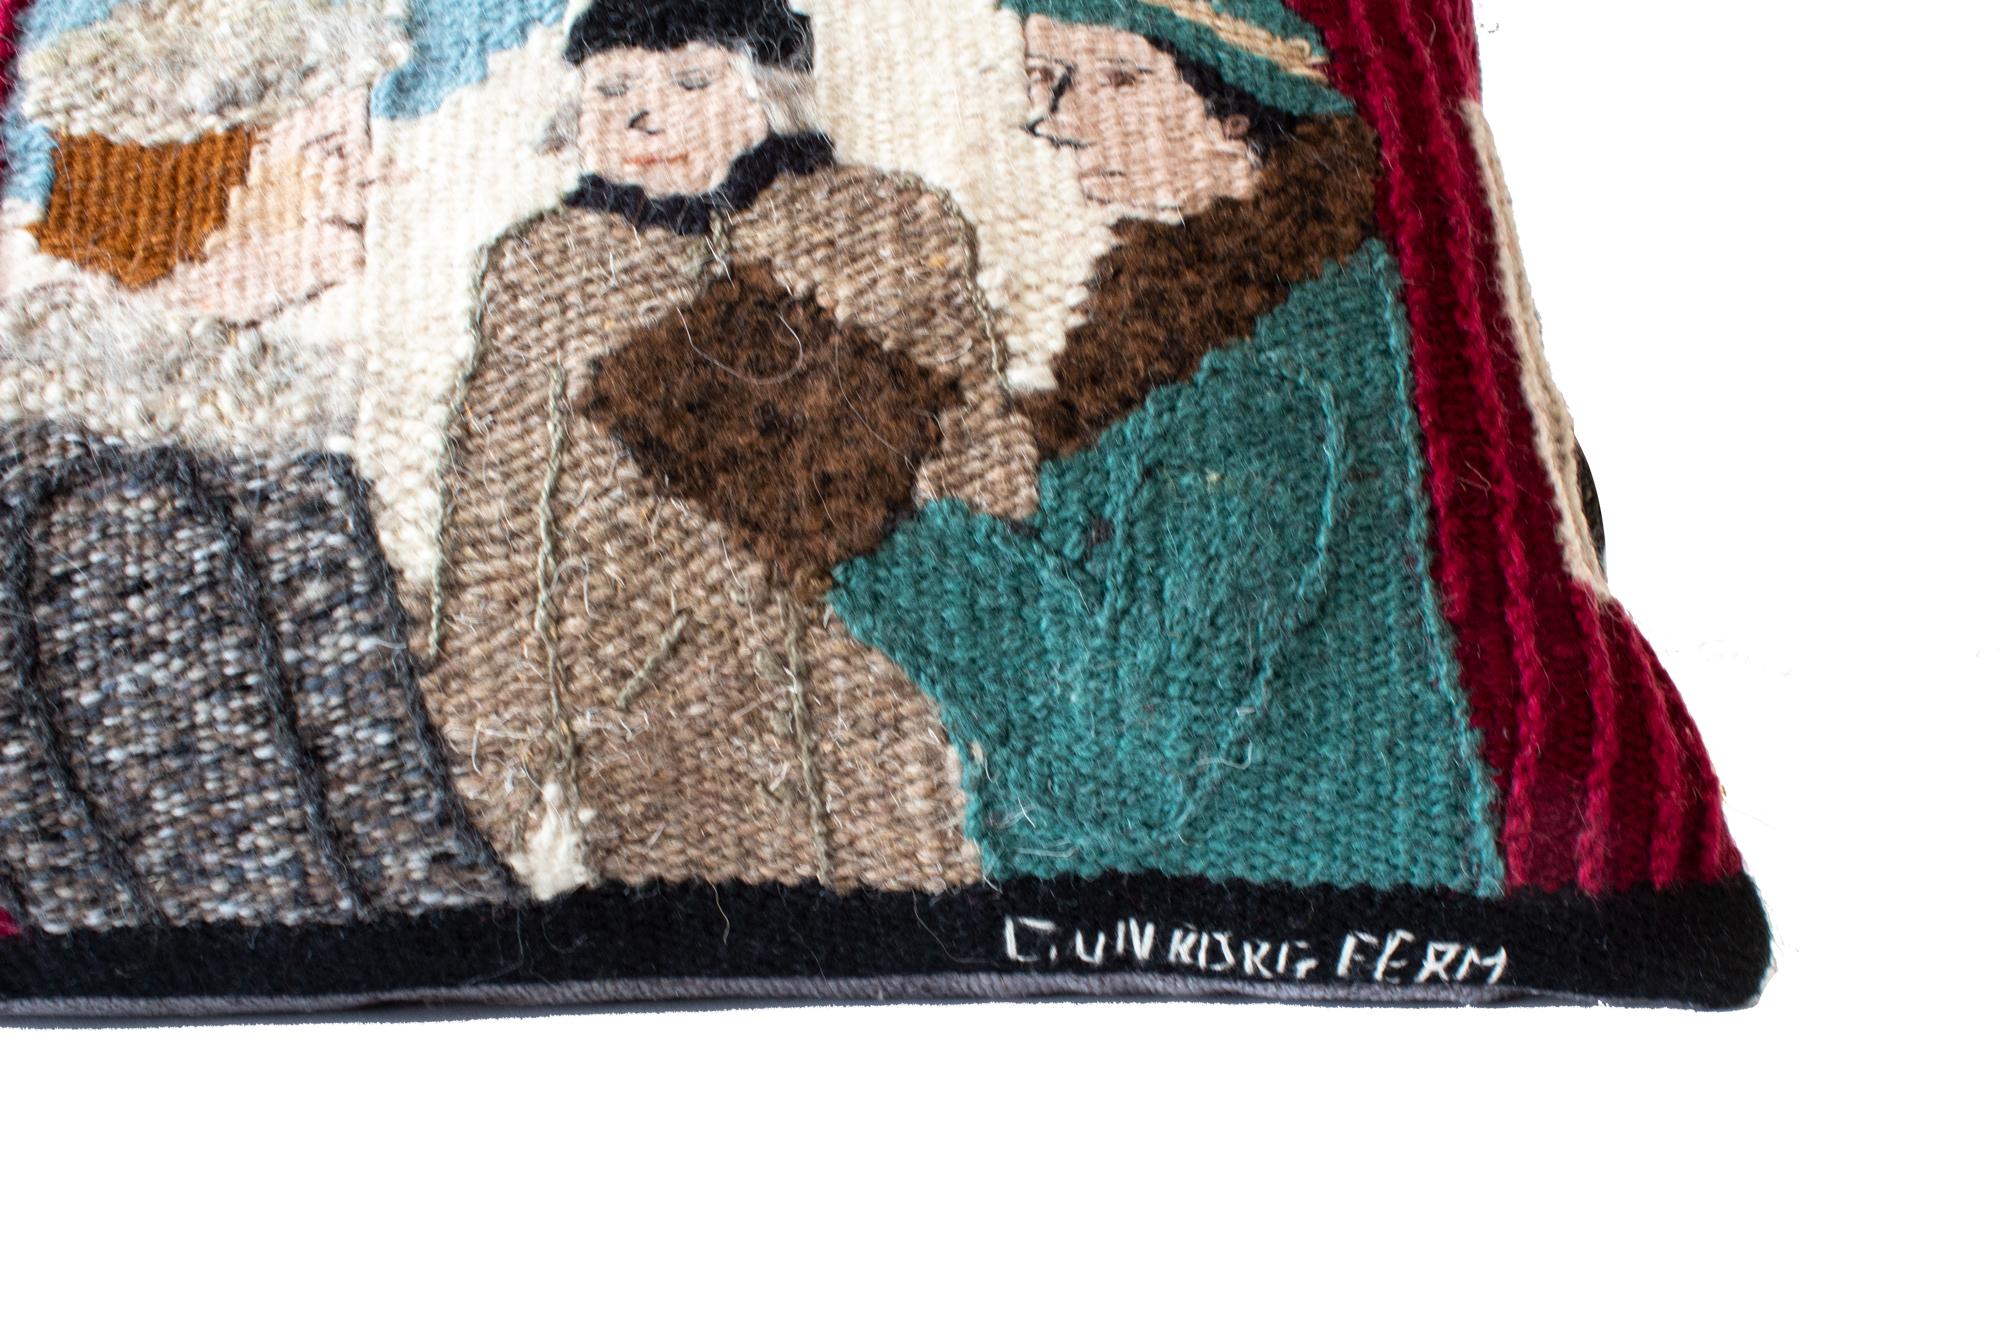 Folk Art Handwoven Tapestry Cushion Show a Local Motif by Swedish Artist Gunborg Ferm